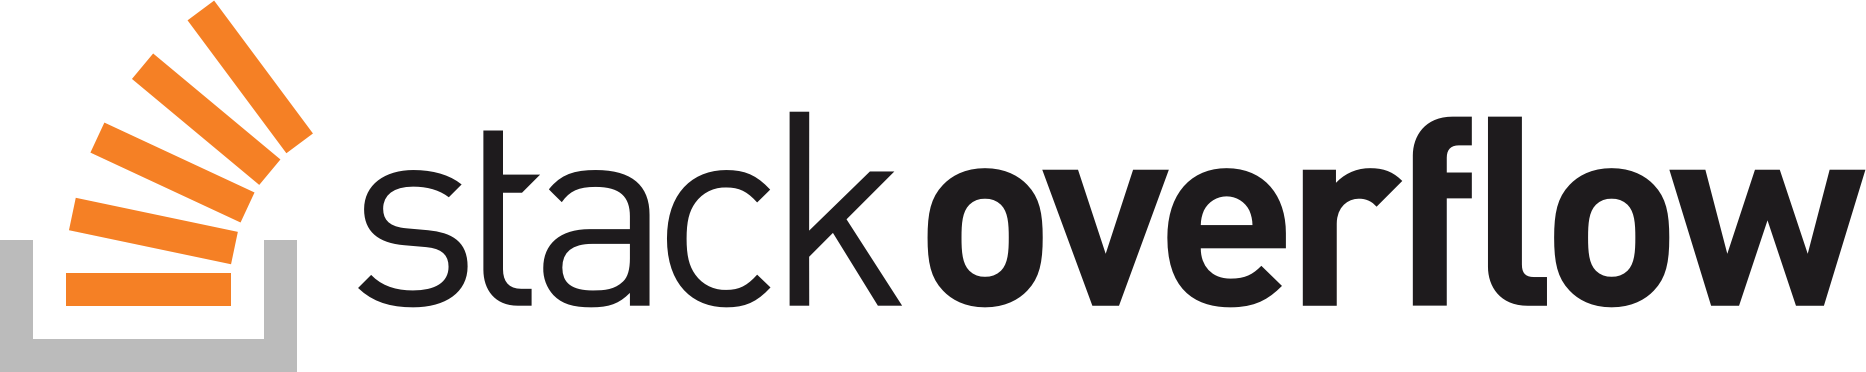 logotipo do stack overflow